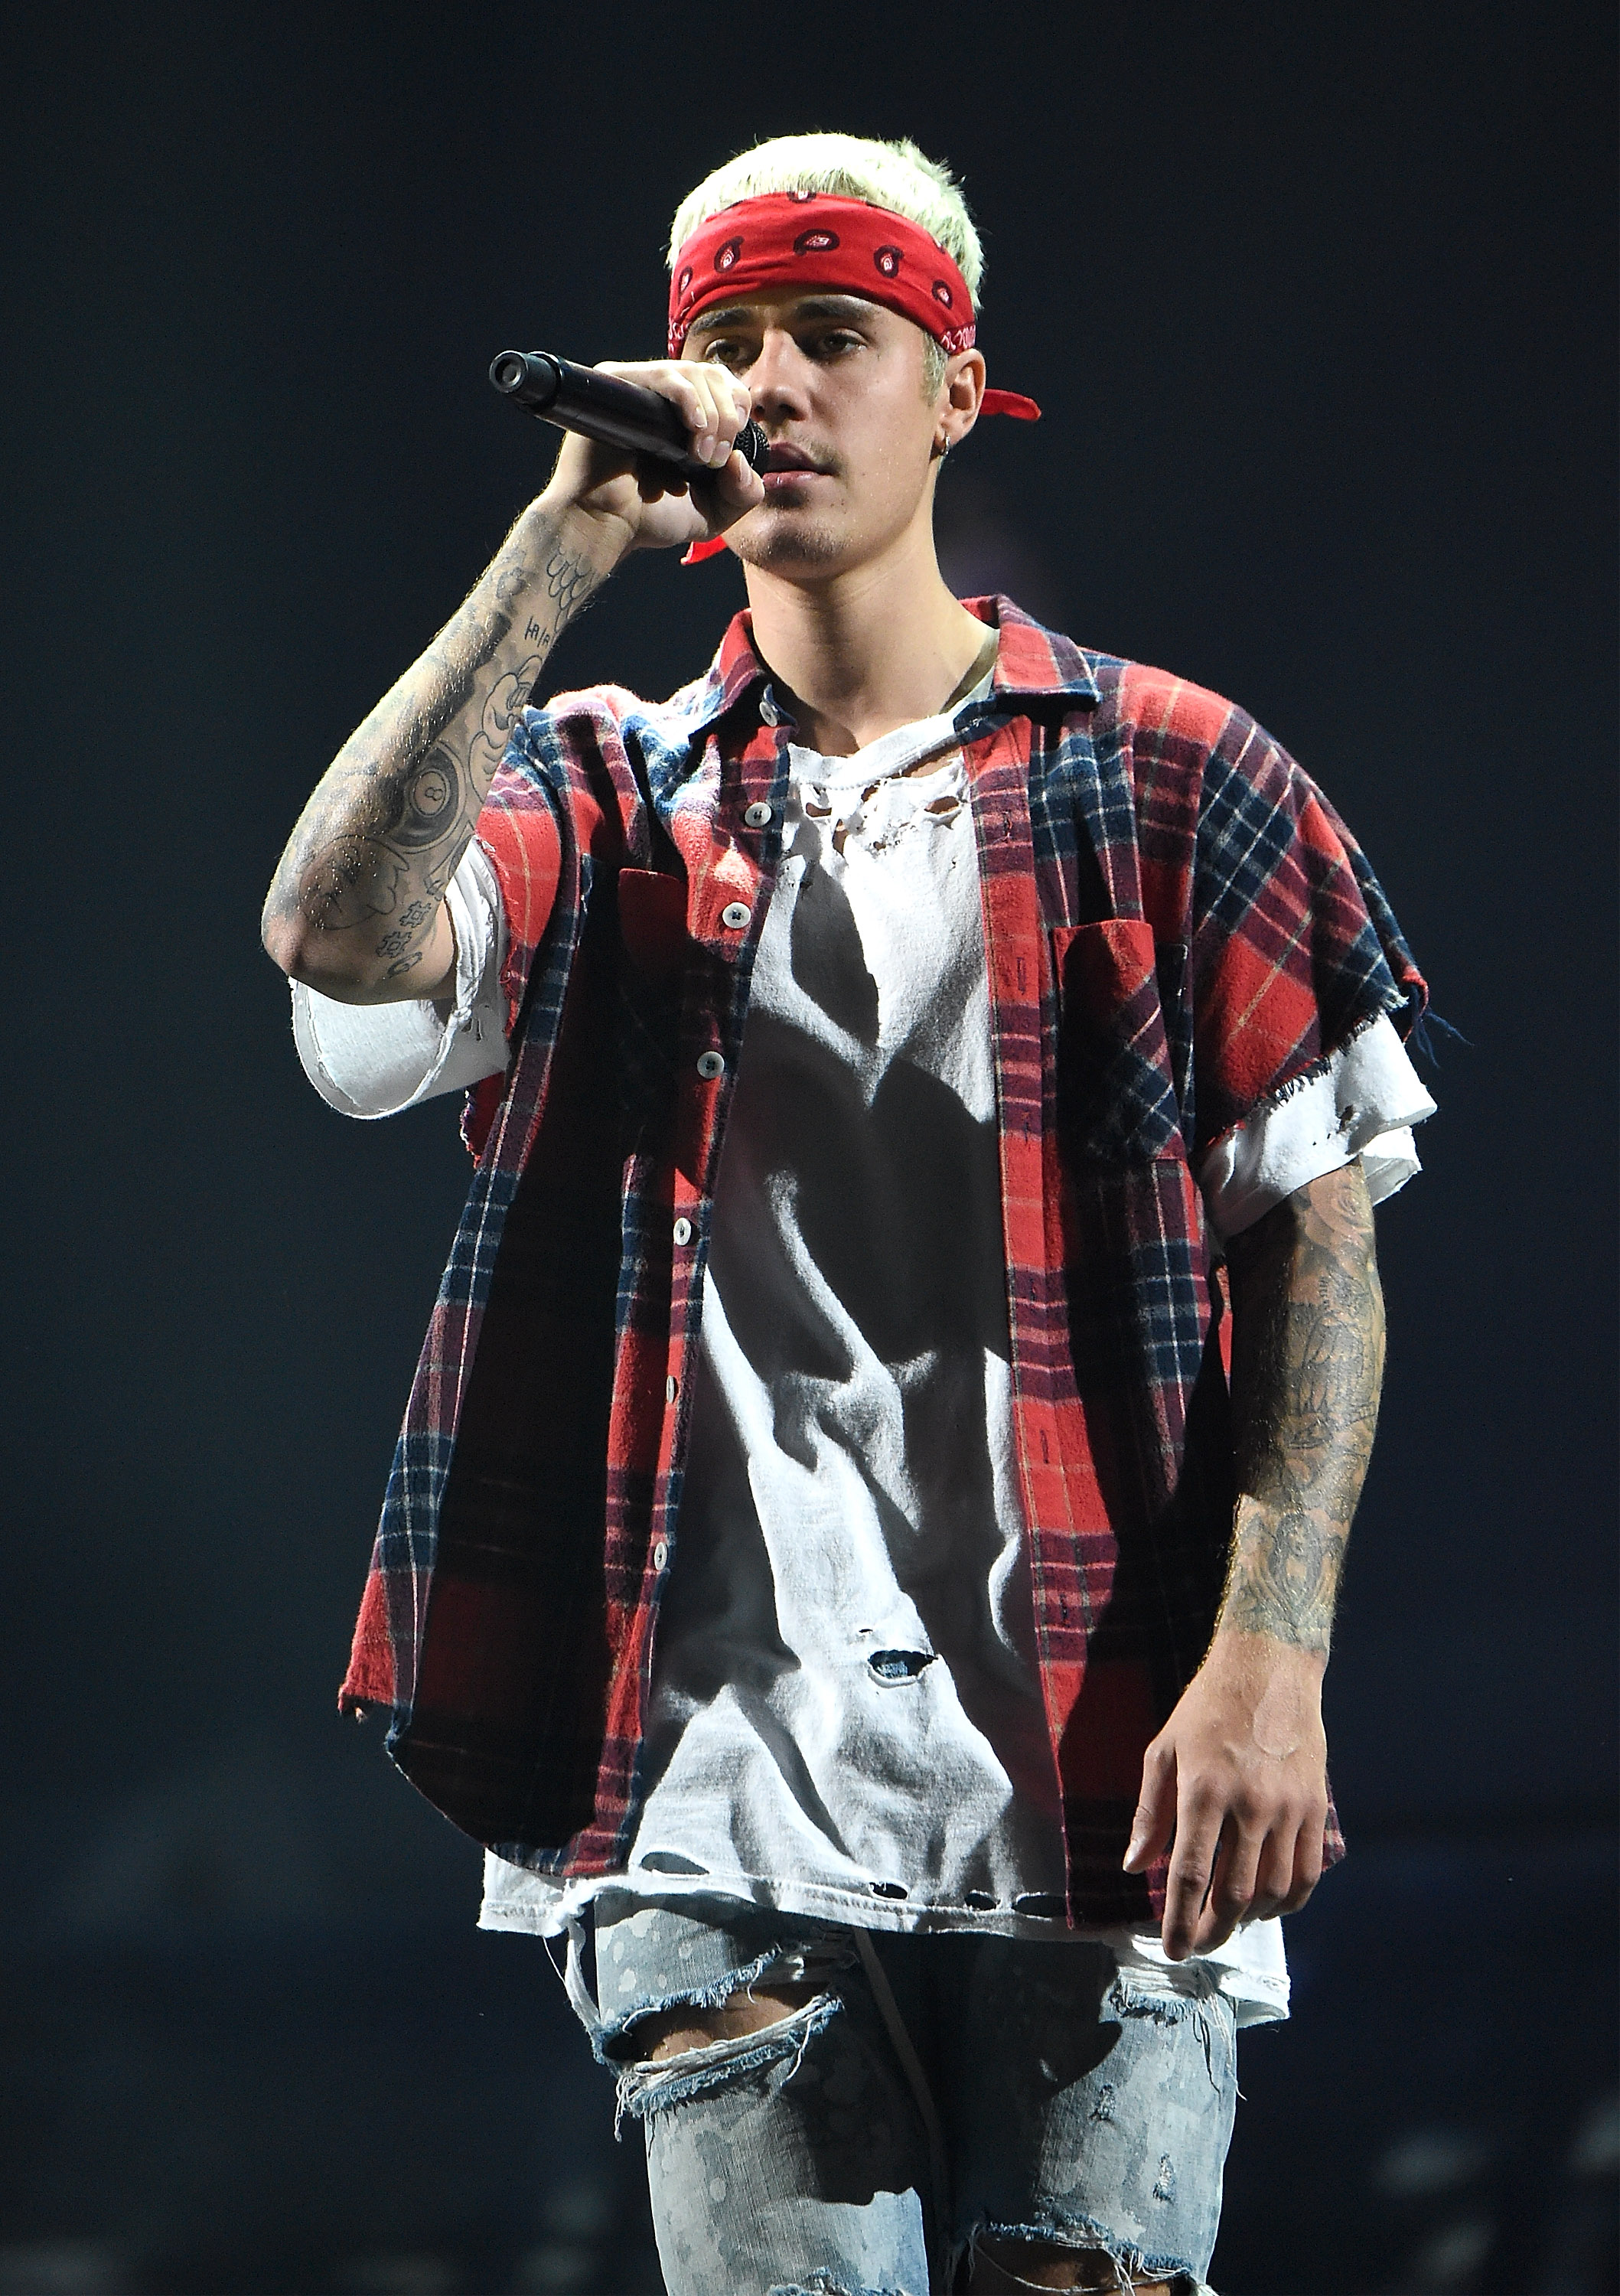 Justin Bieber "Purpose" Tour - New York